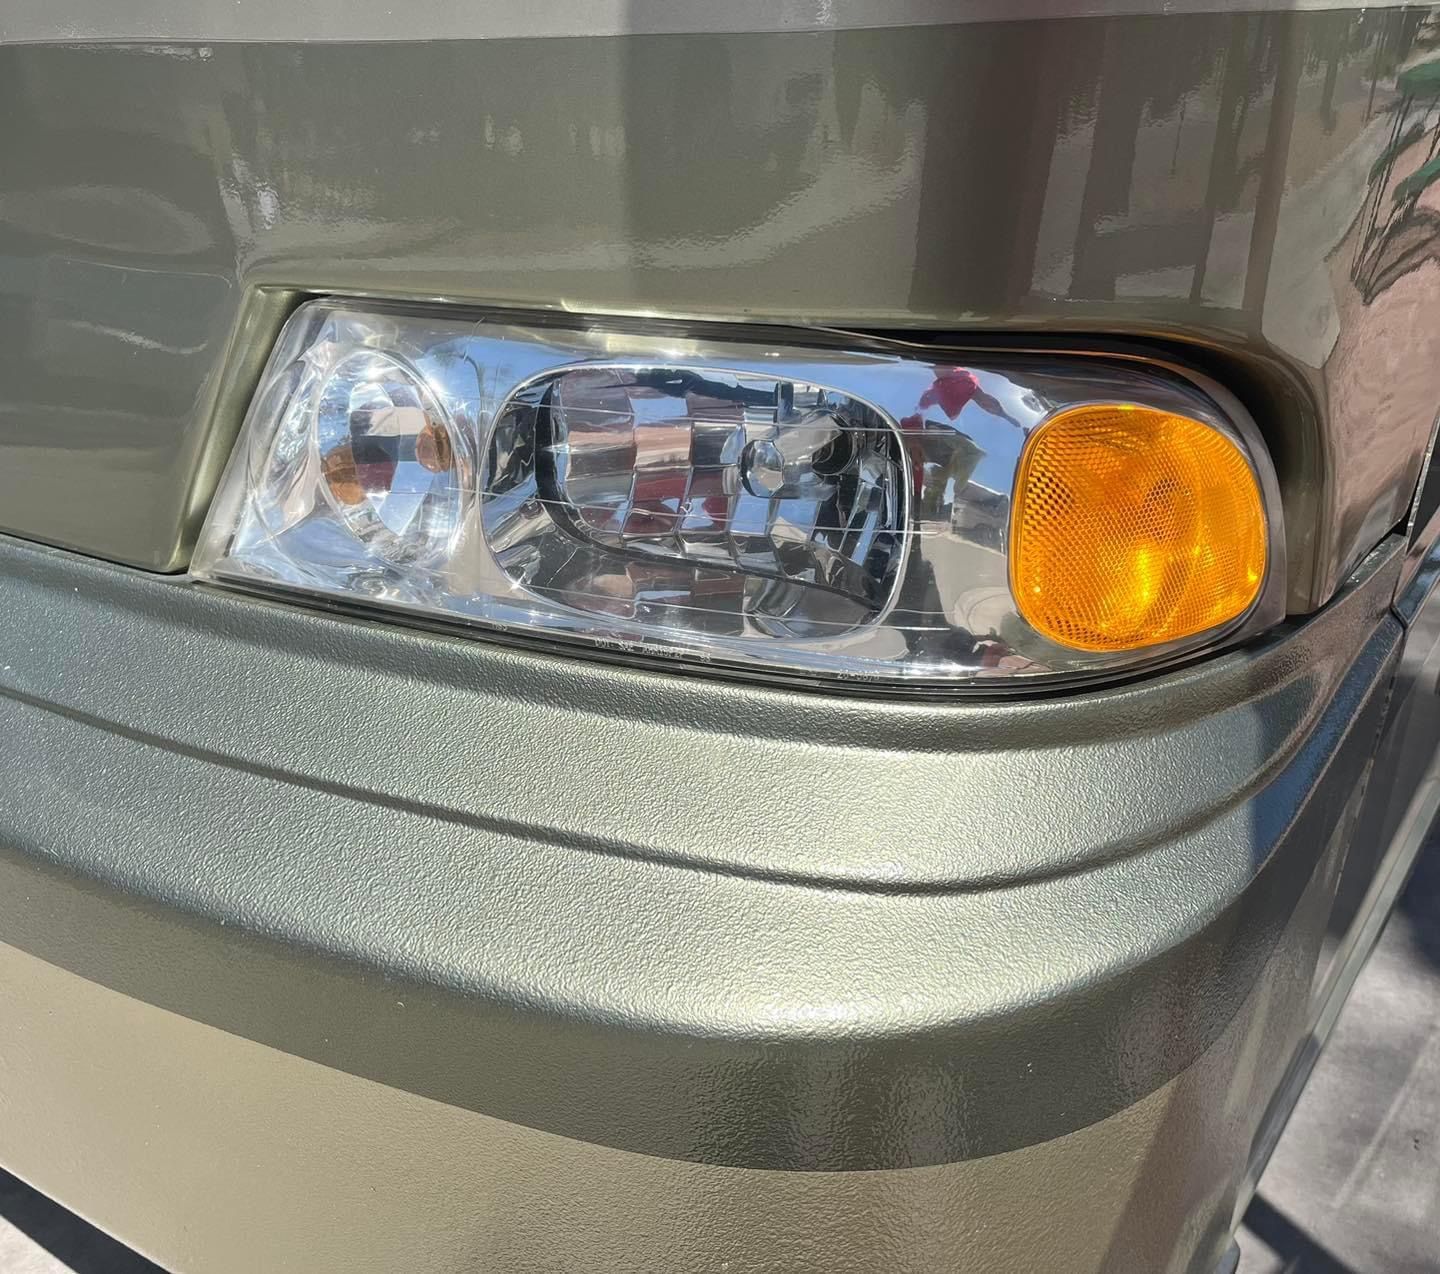 A close up of a car 's headlight and bumper.